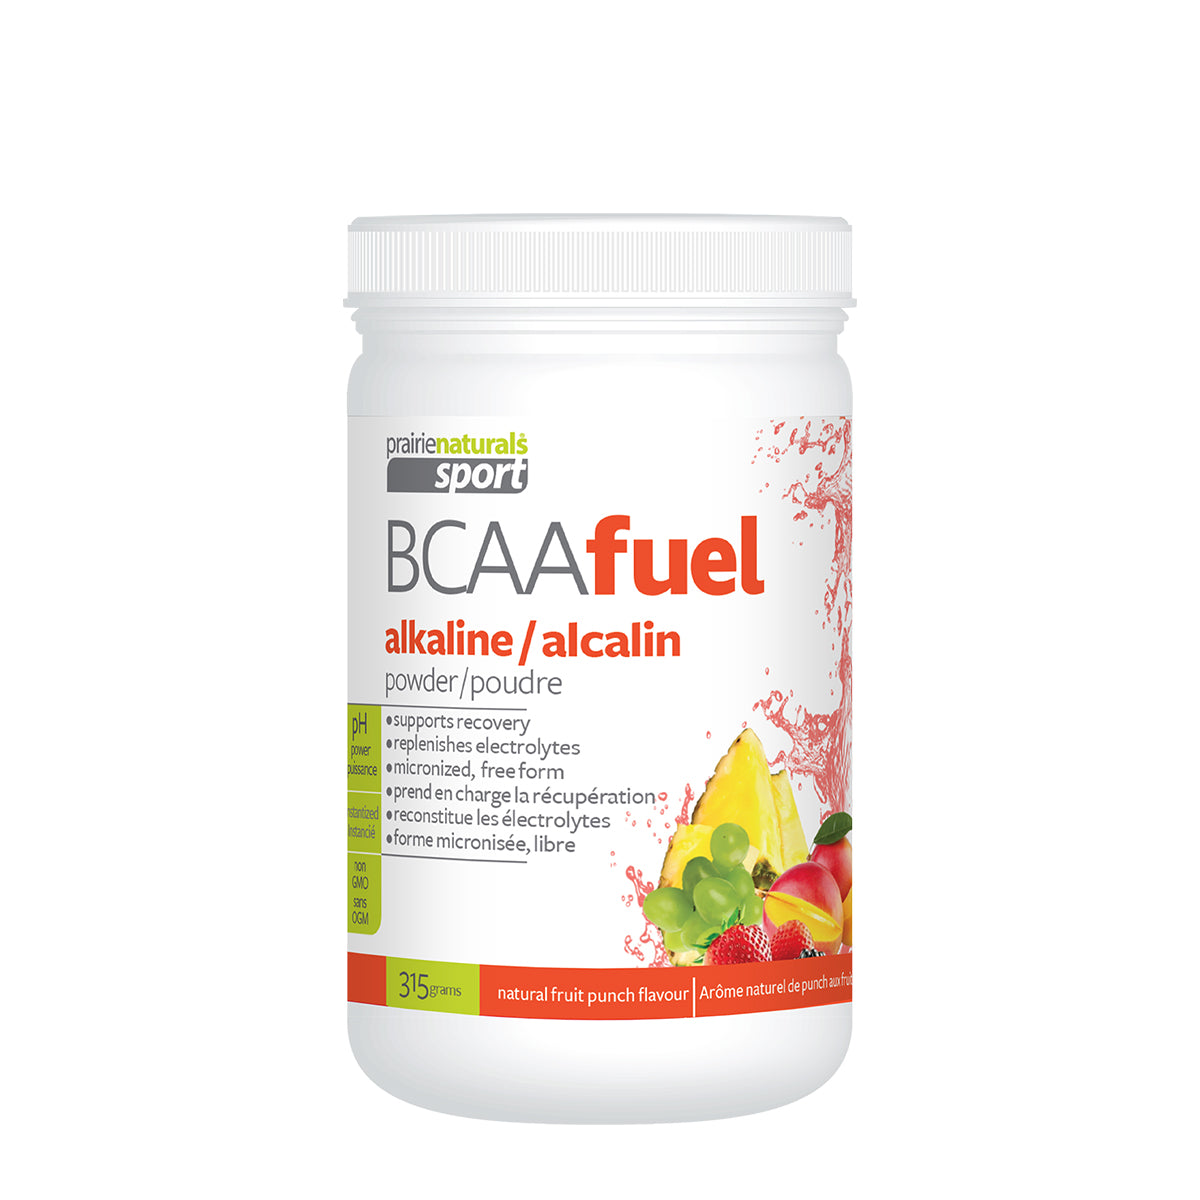 BCAA Fuel Fruit Punch powder 315g